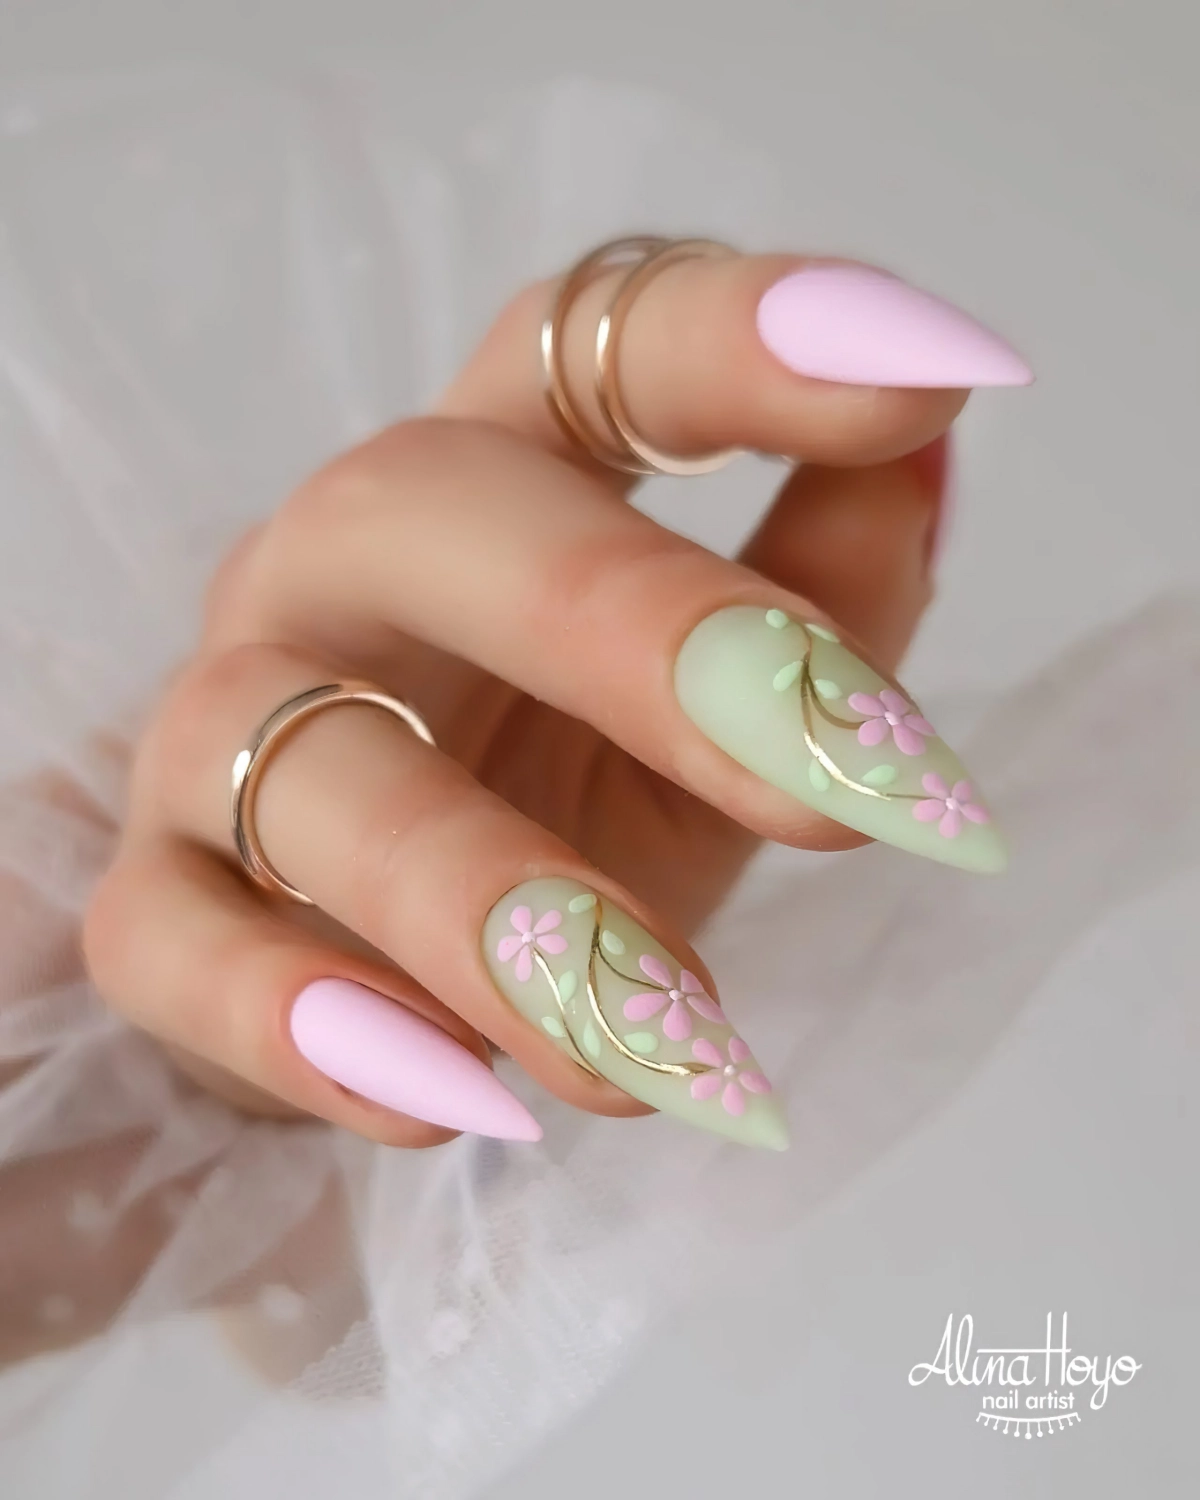 ongles vert pastel et rose nail art dessins fleurs finition mate